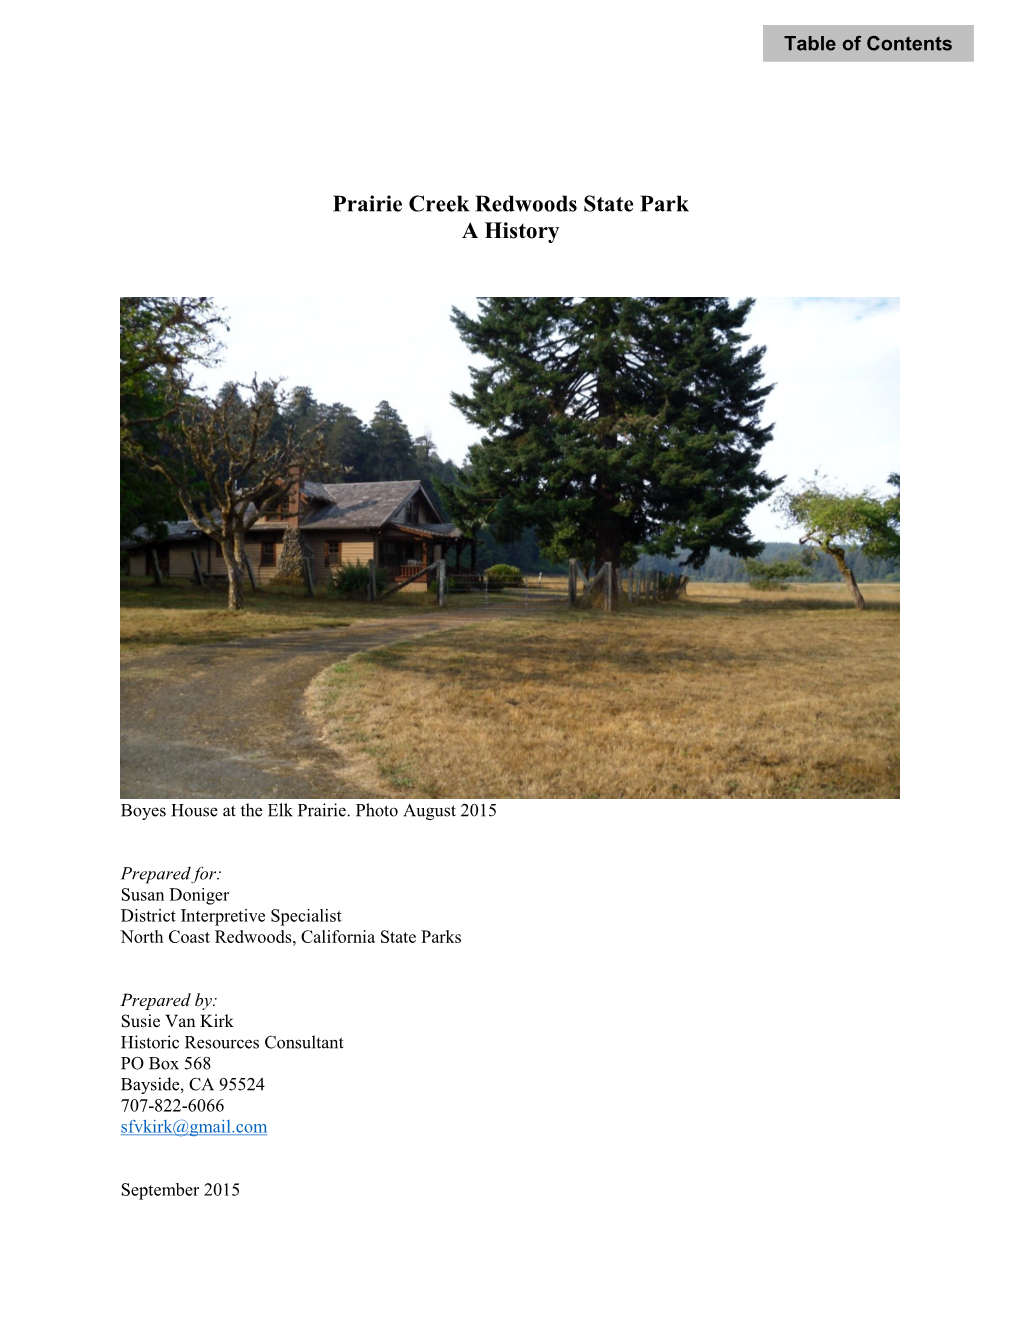 Prairie Creek Redwoods State Park a History